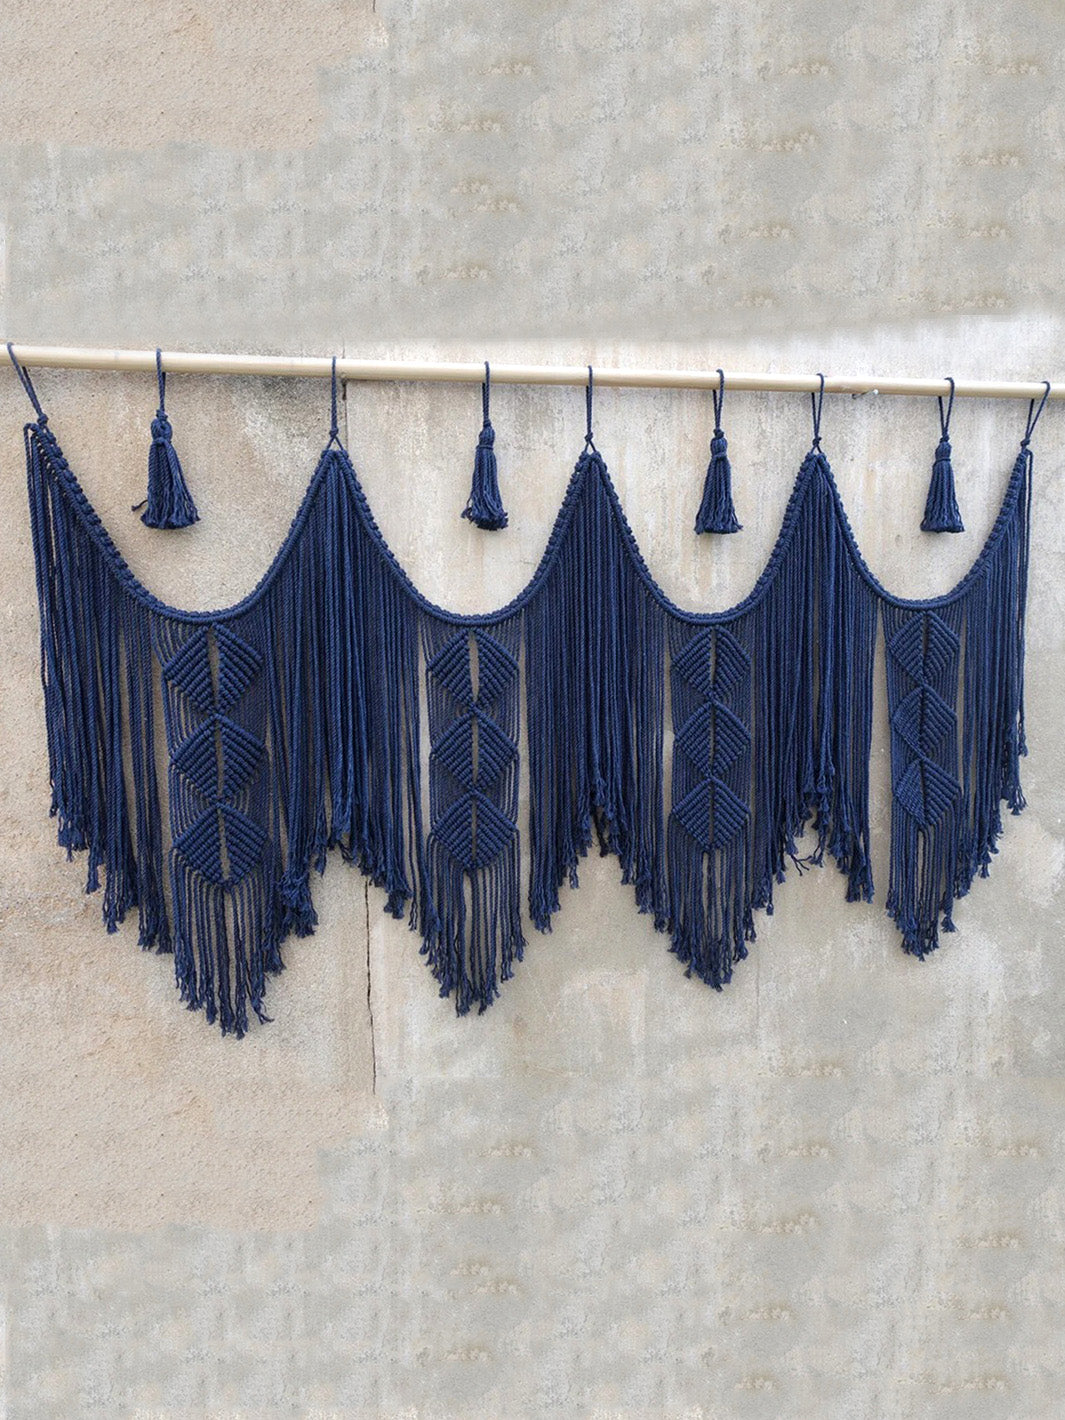 Handcrafted Navy Blue Macrame Boho Wall Hanging Headboard Decoration